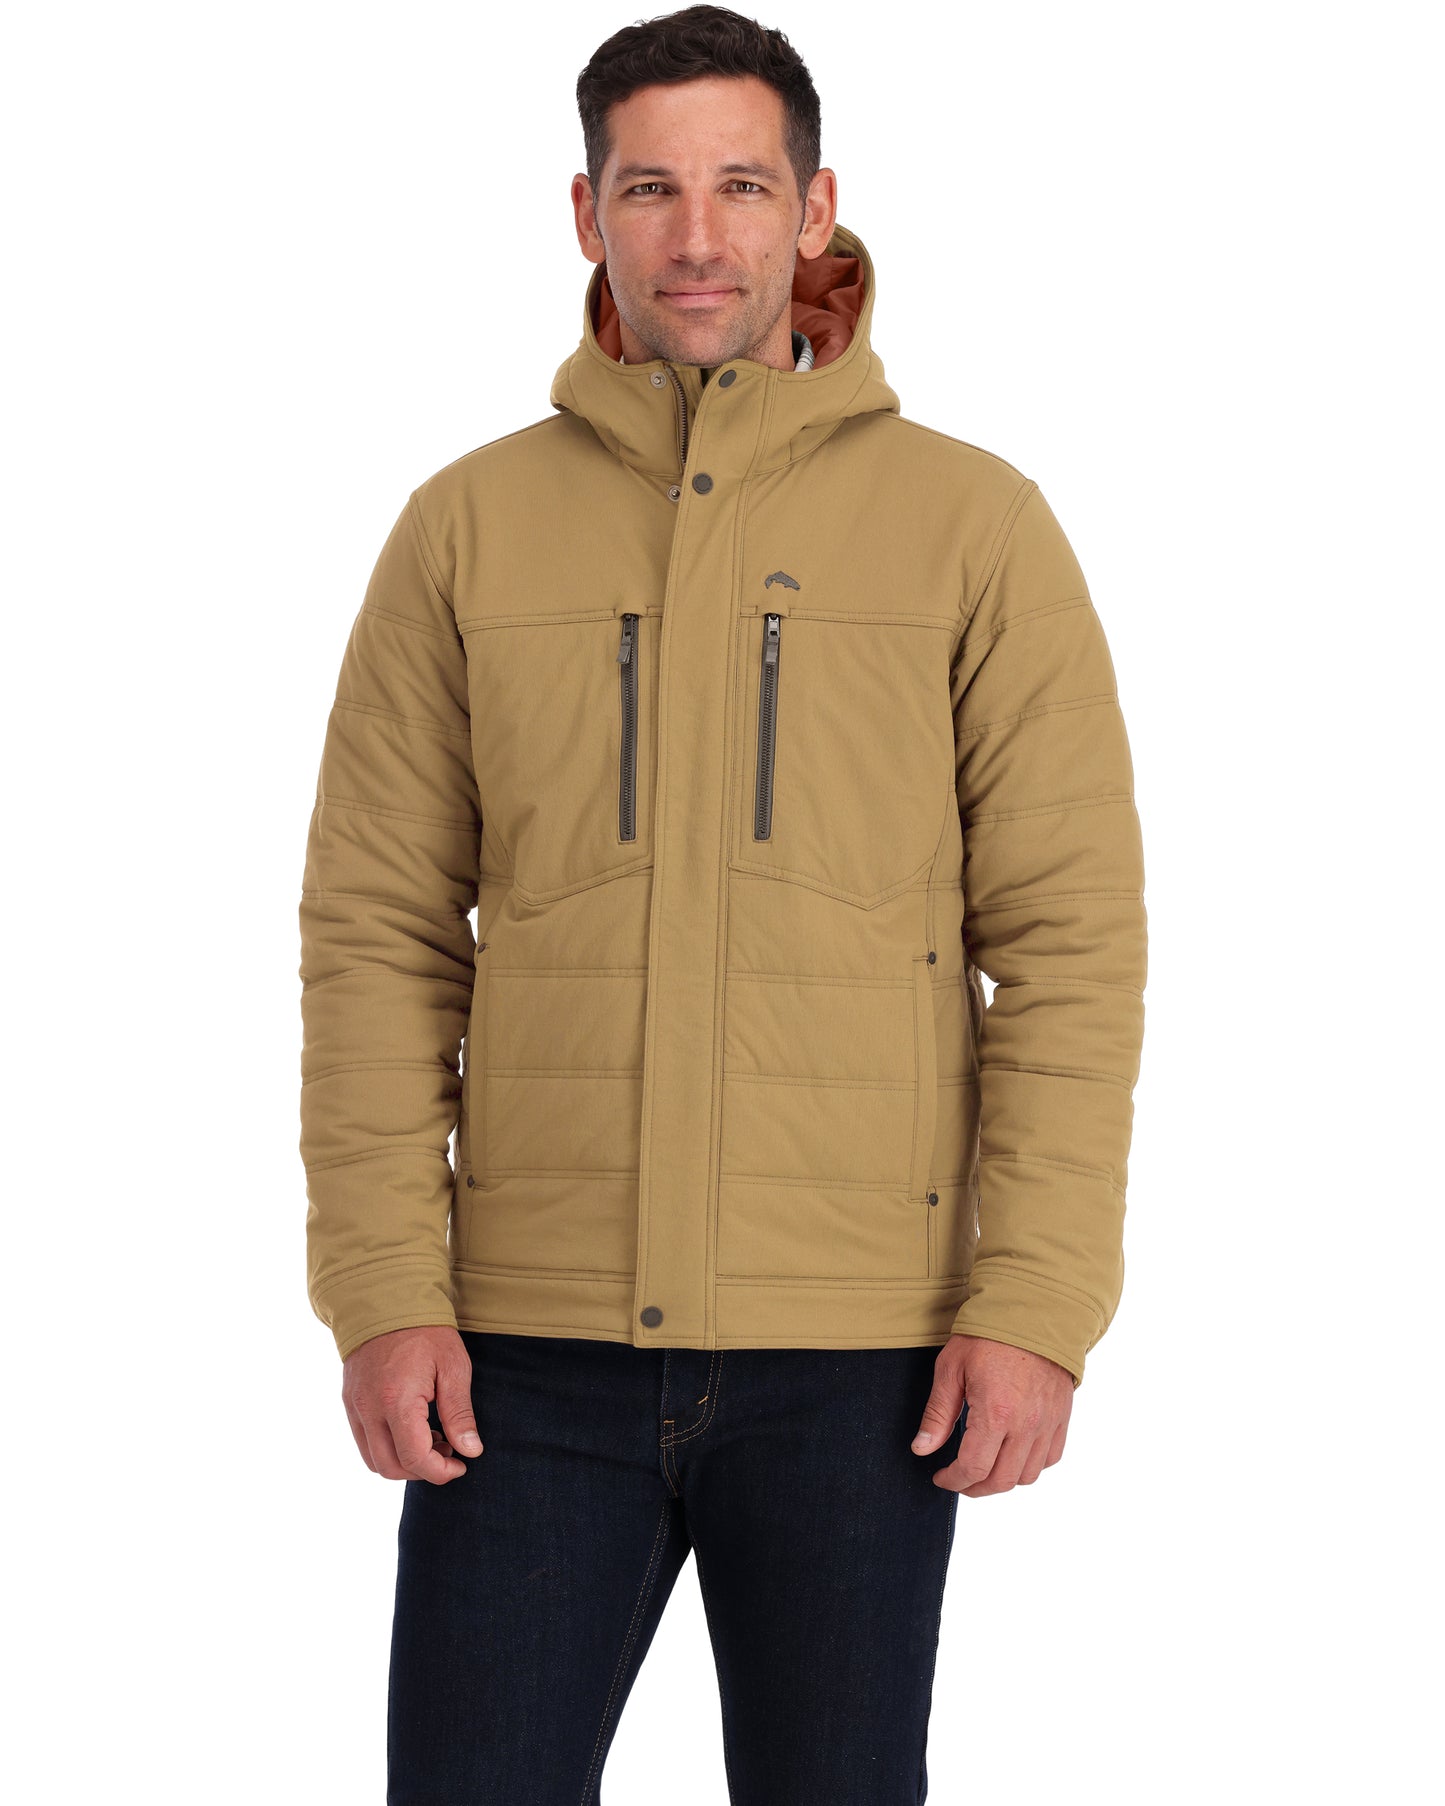 13599-259-cardwell-hooded-jacket-model